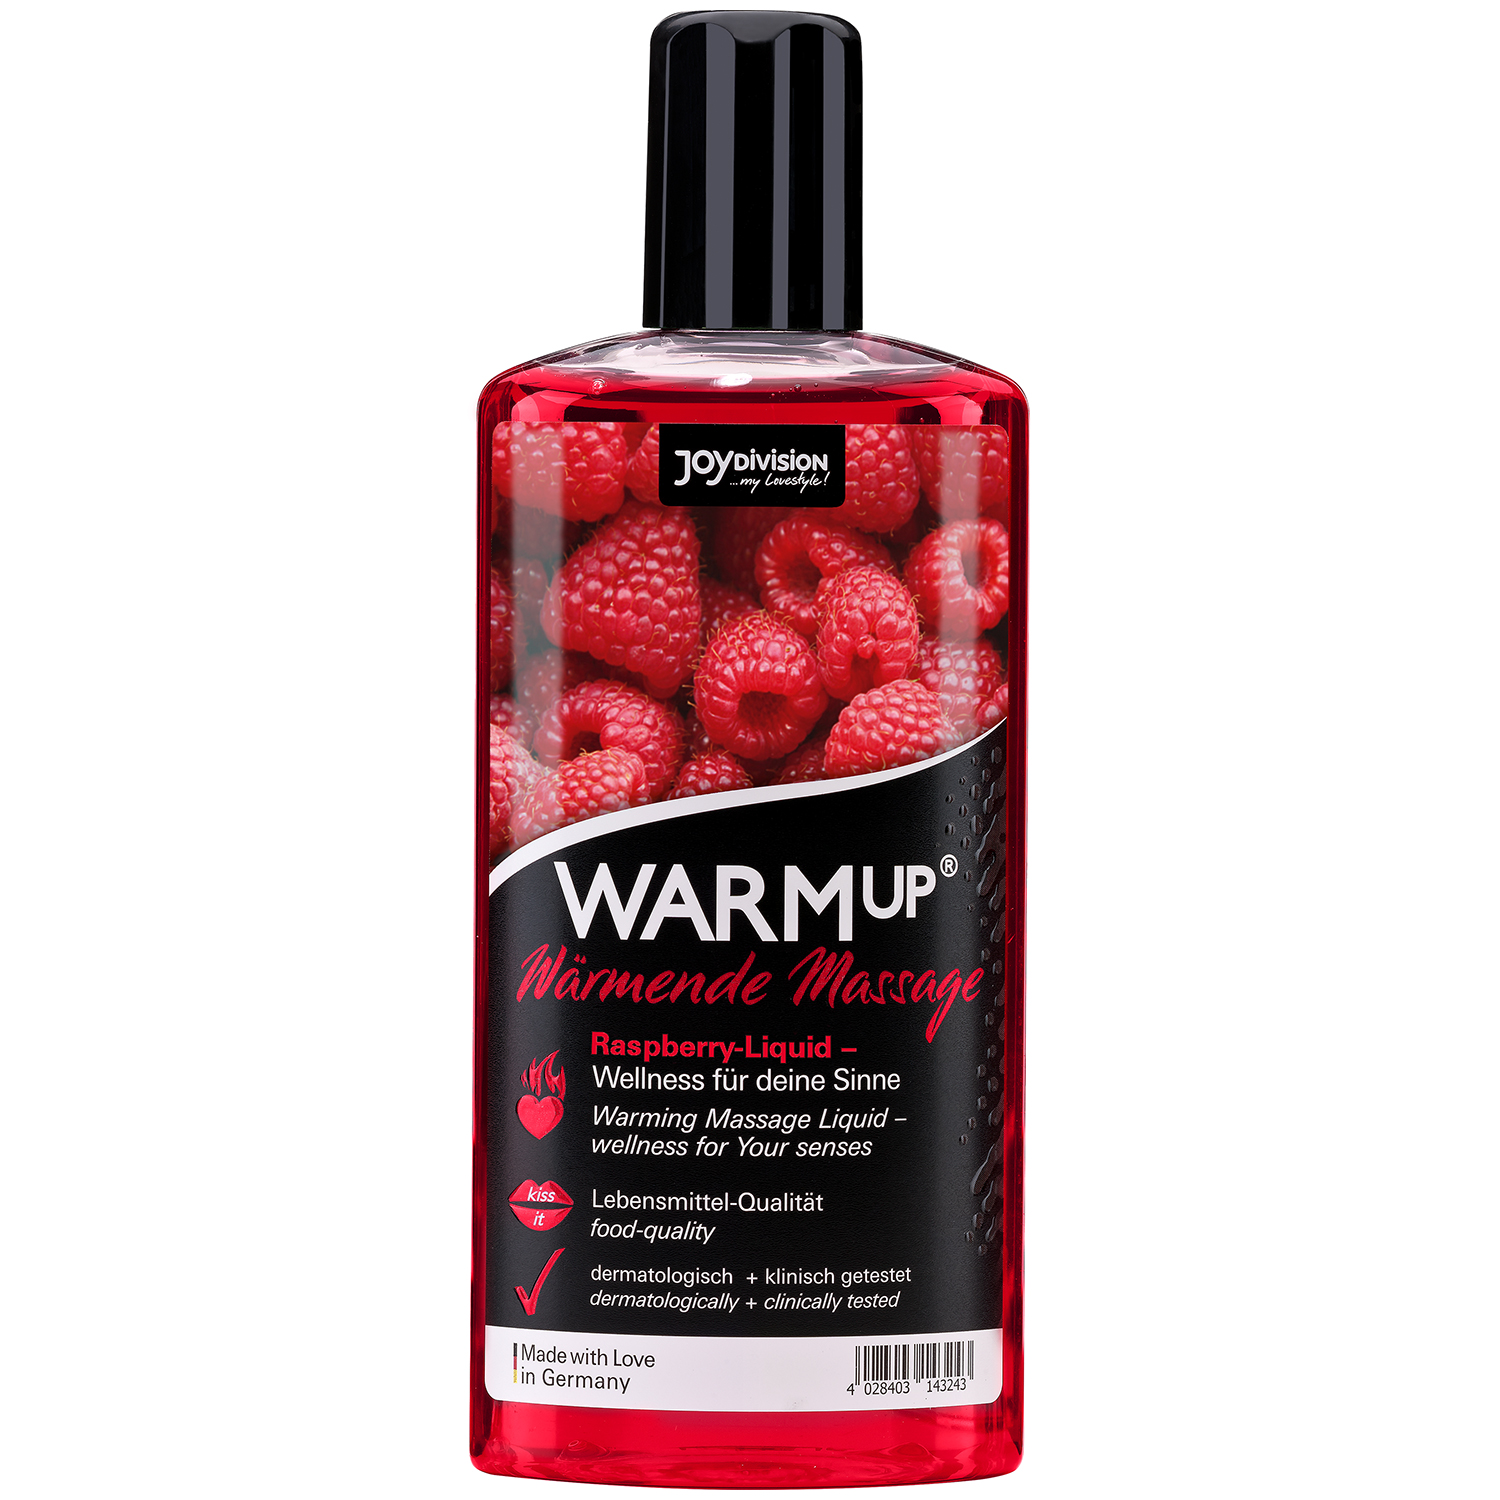 JoyDivision WARMup Varmende Massageolie med Smag 150 ml   - Rød thumbnail